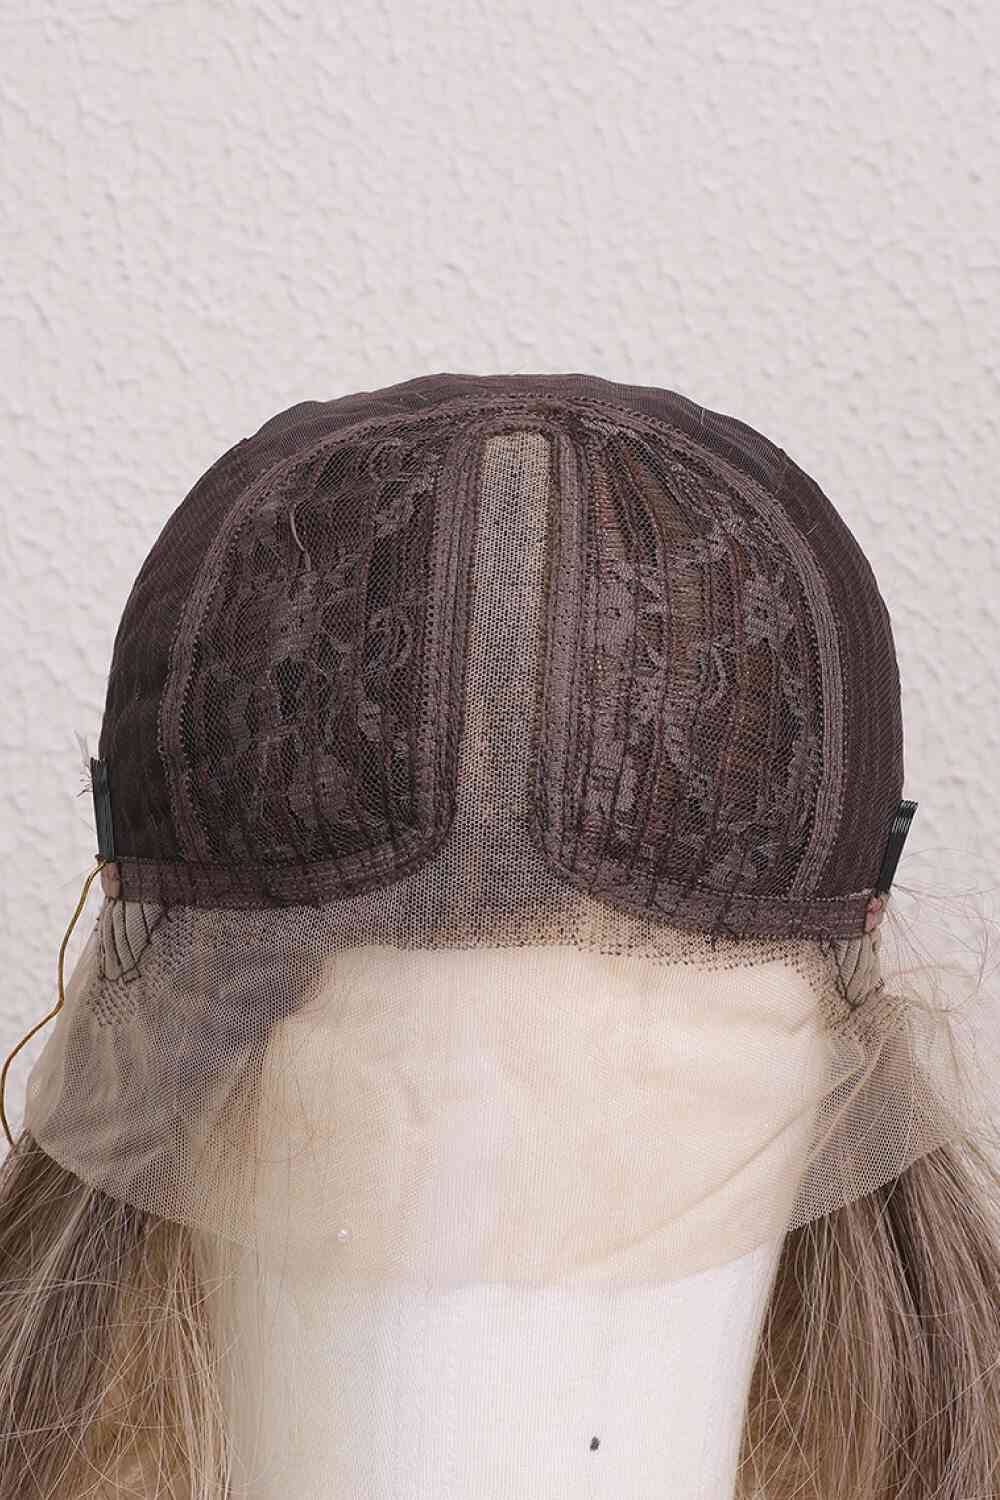 13*2" Long Wave Lace Front Wigs 24" Long 150% Density